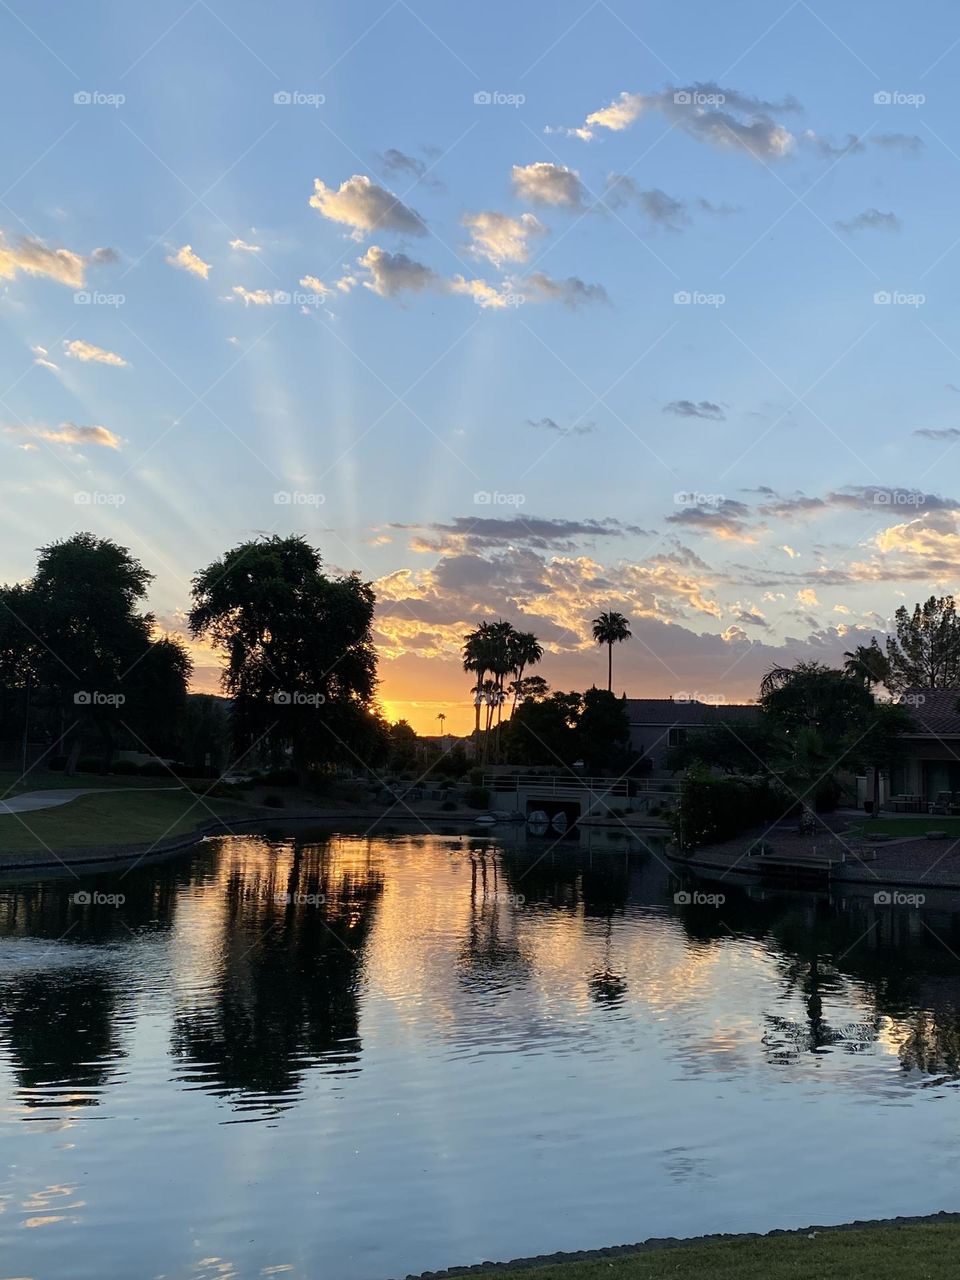 Arizona sunrise